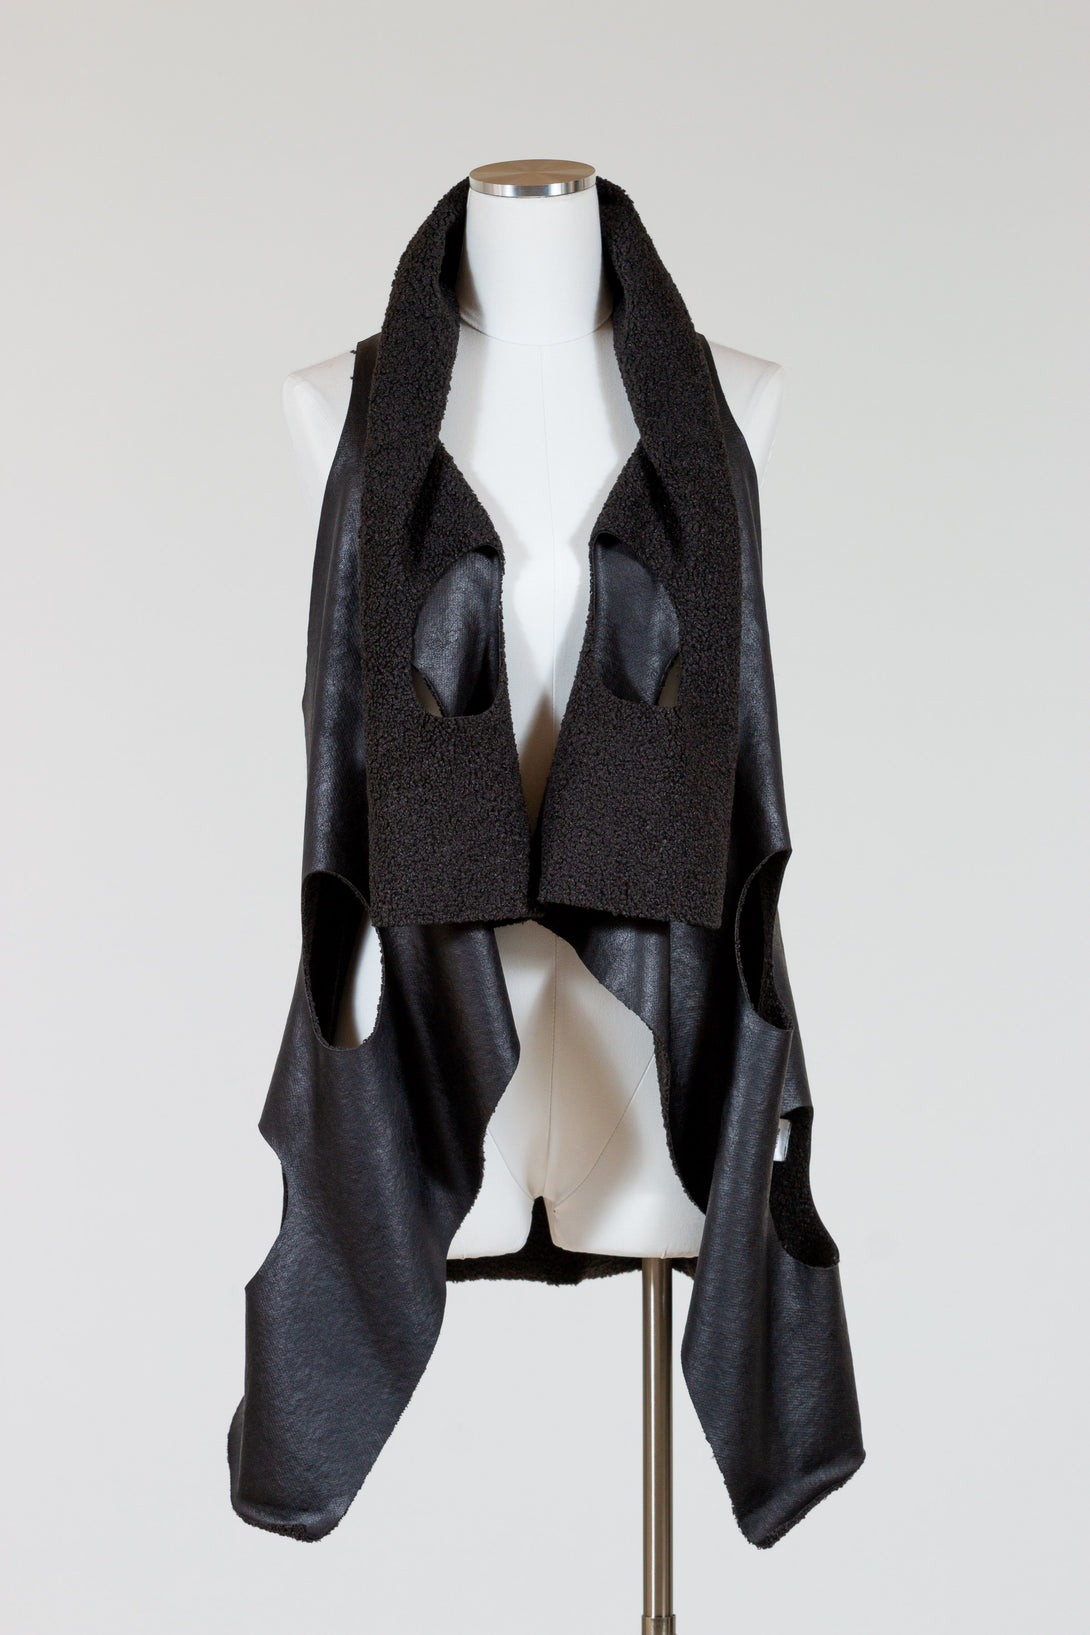 Kozan-Heather-Vest-Faux-Leather-Black